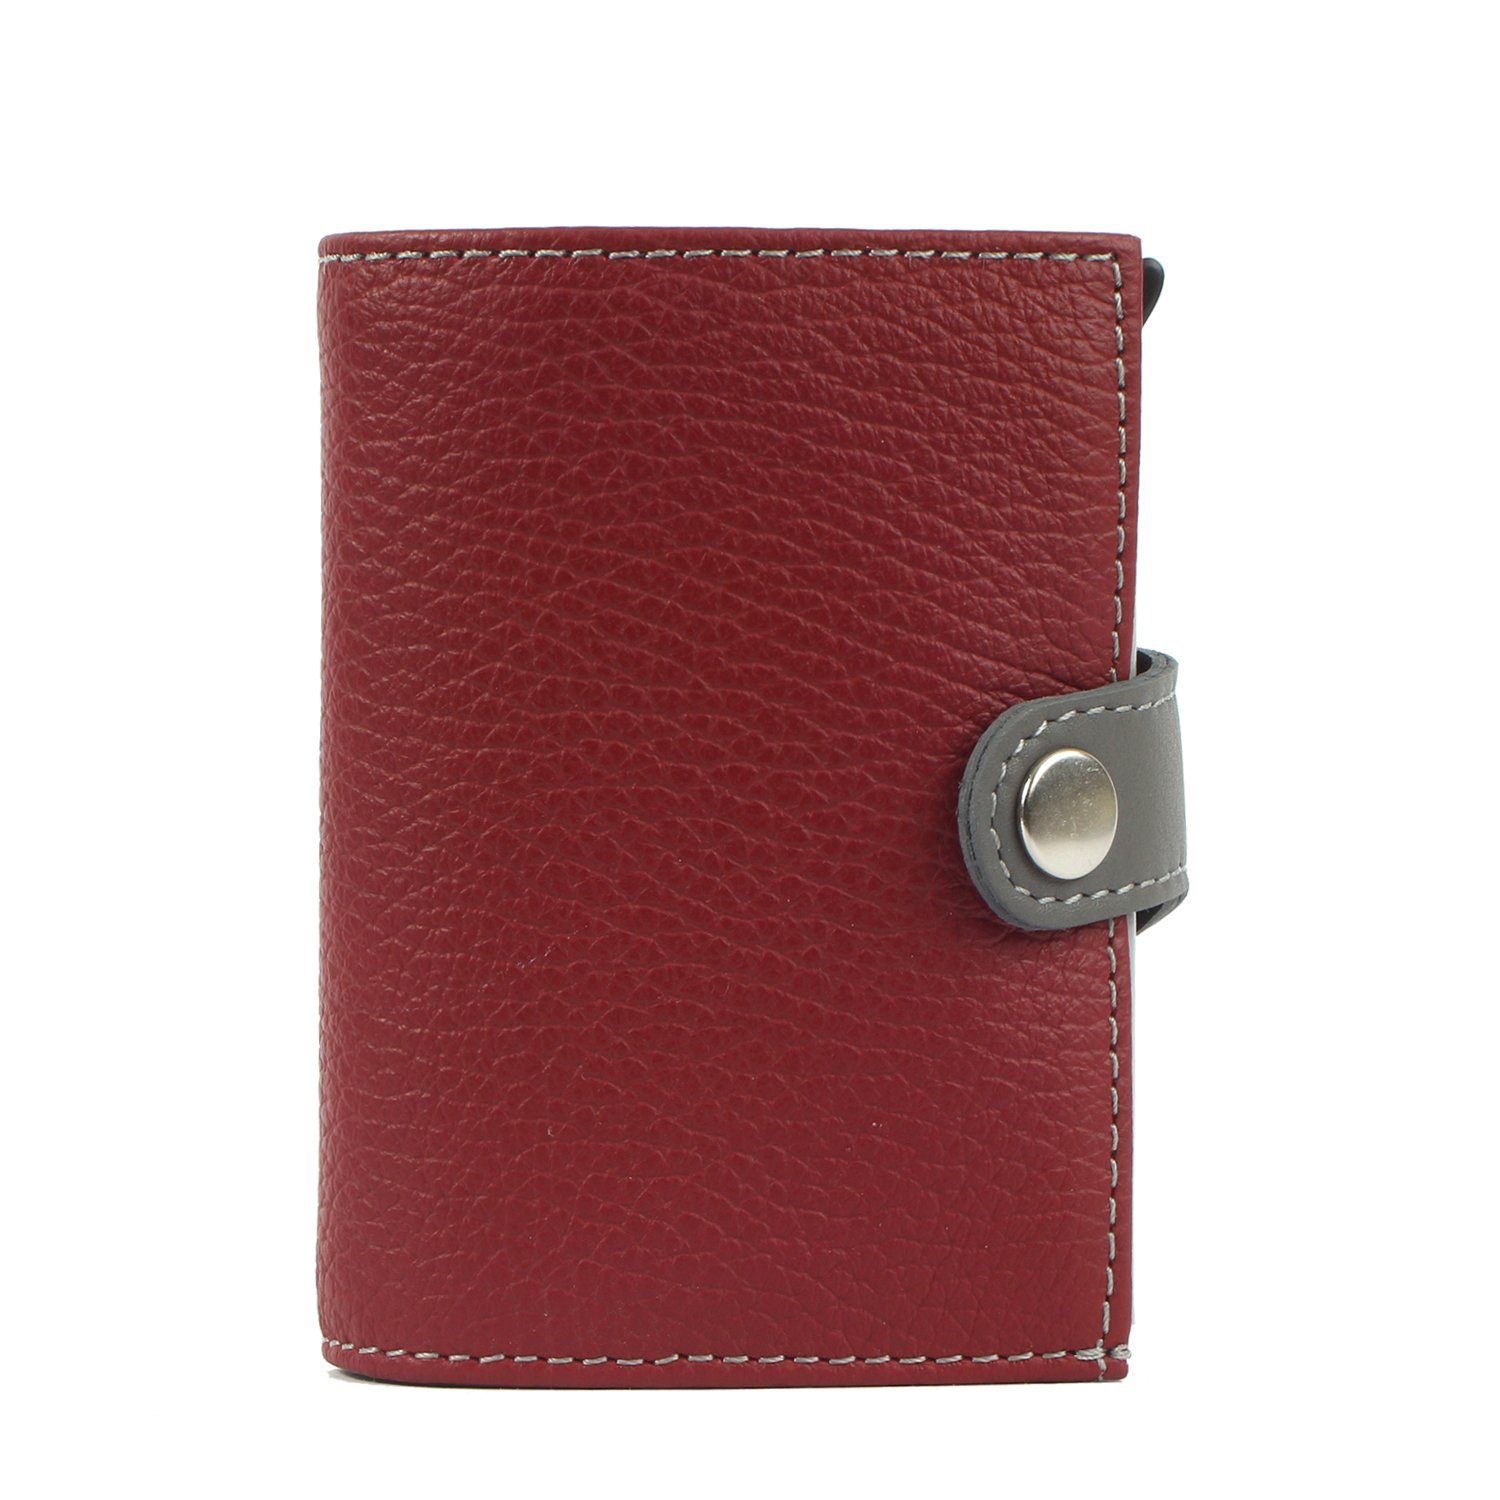 karminrot aus Mini noonyu Margelisch leather, Kreditkartenbörse double Upcycling Leder RFID Geldbörse